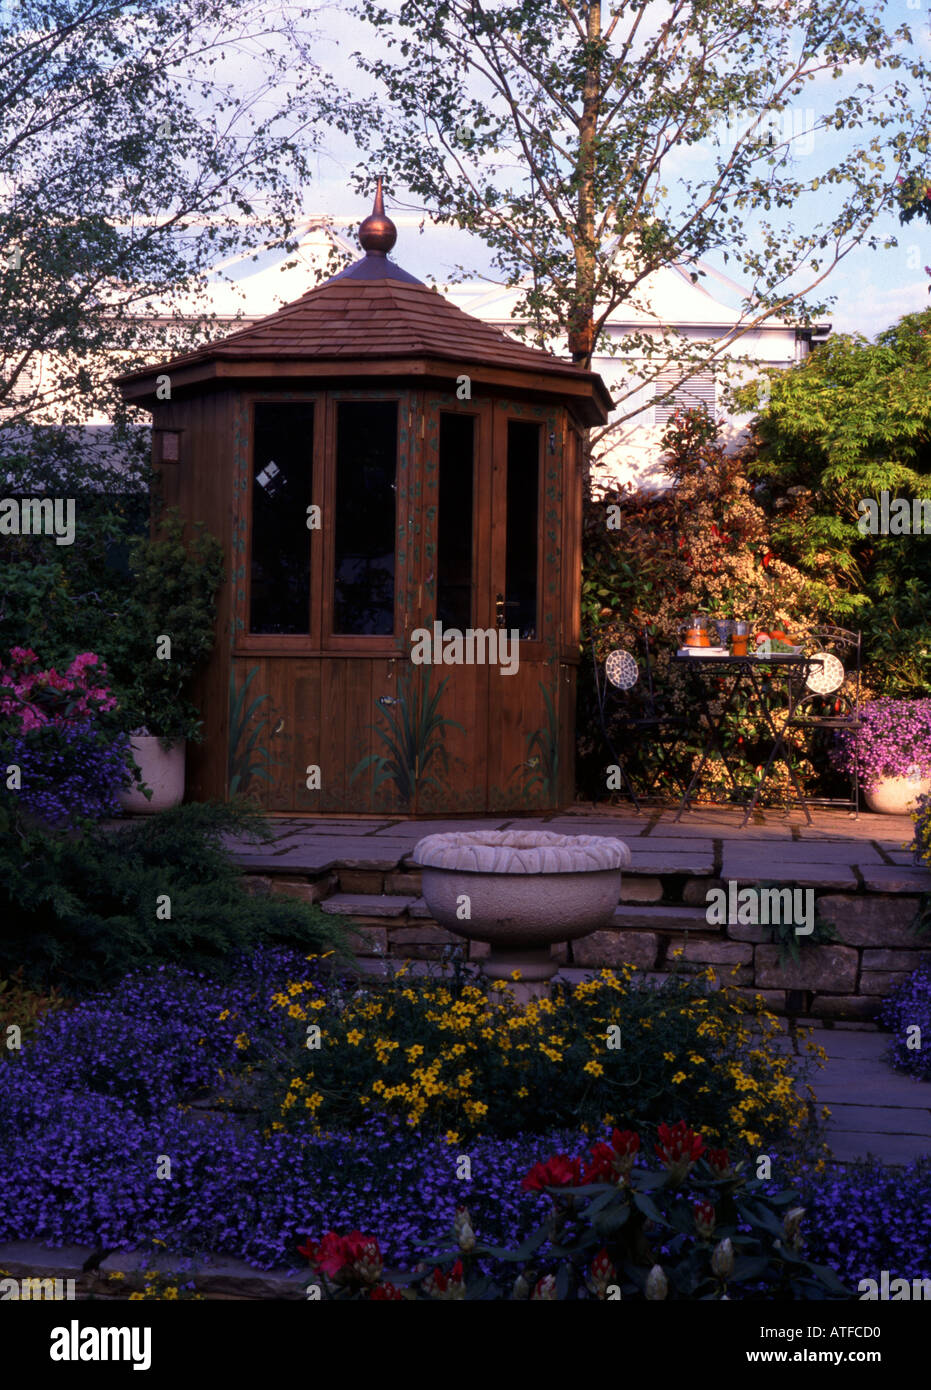 The Gardman Wild Bird Garden designed David Domoney Chelsea Flower Show 2004 Stock Photo